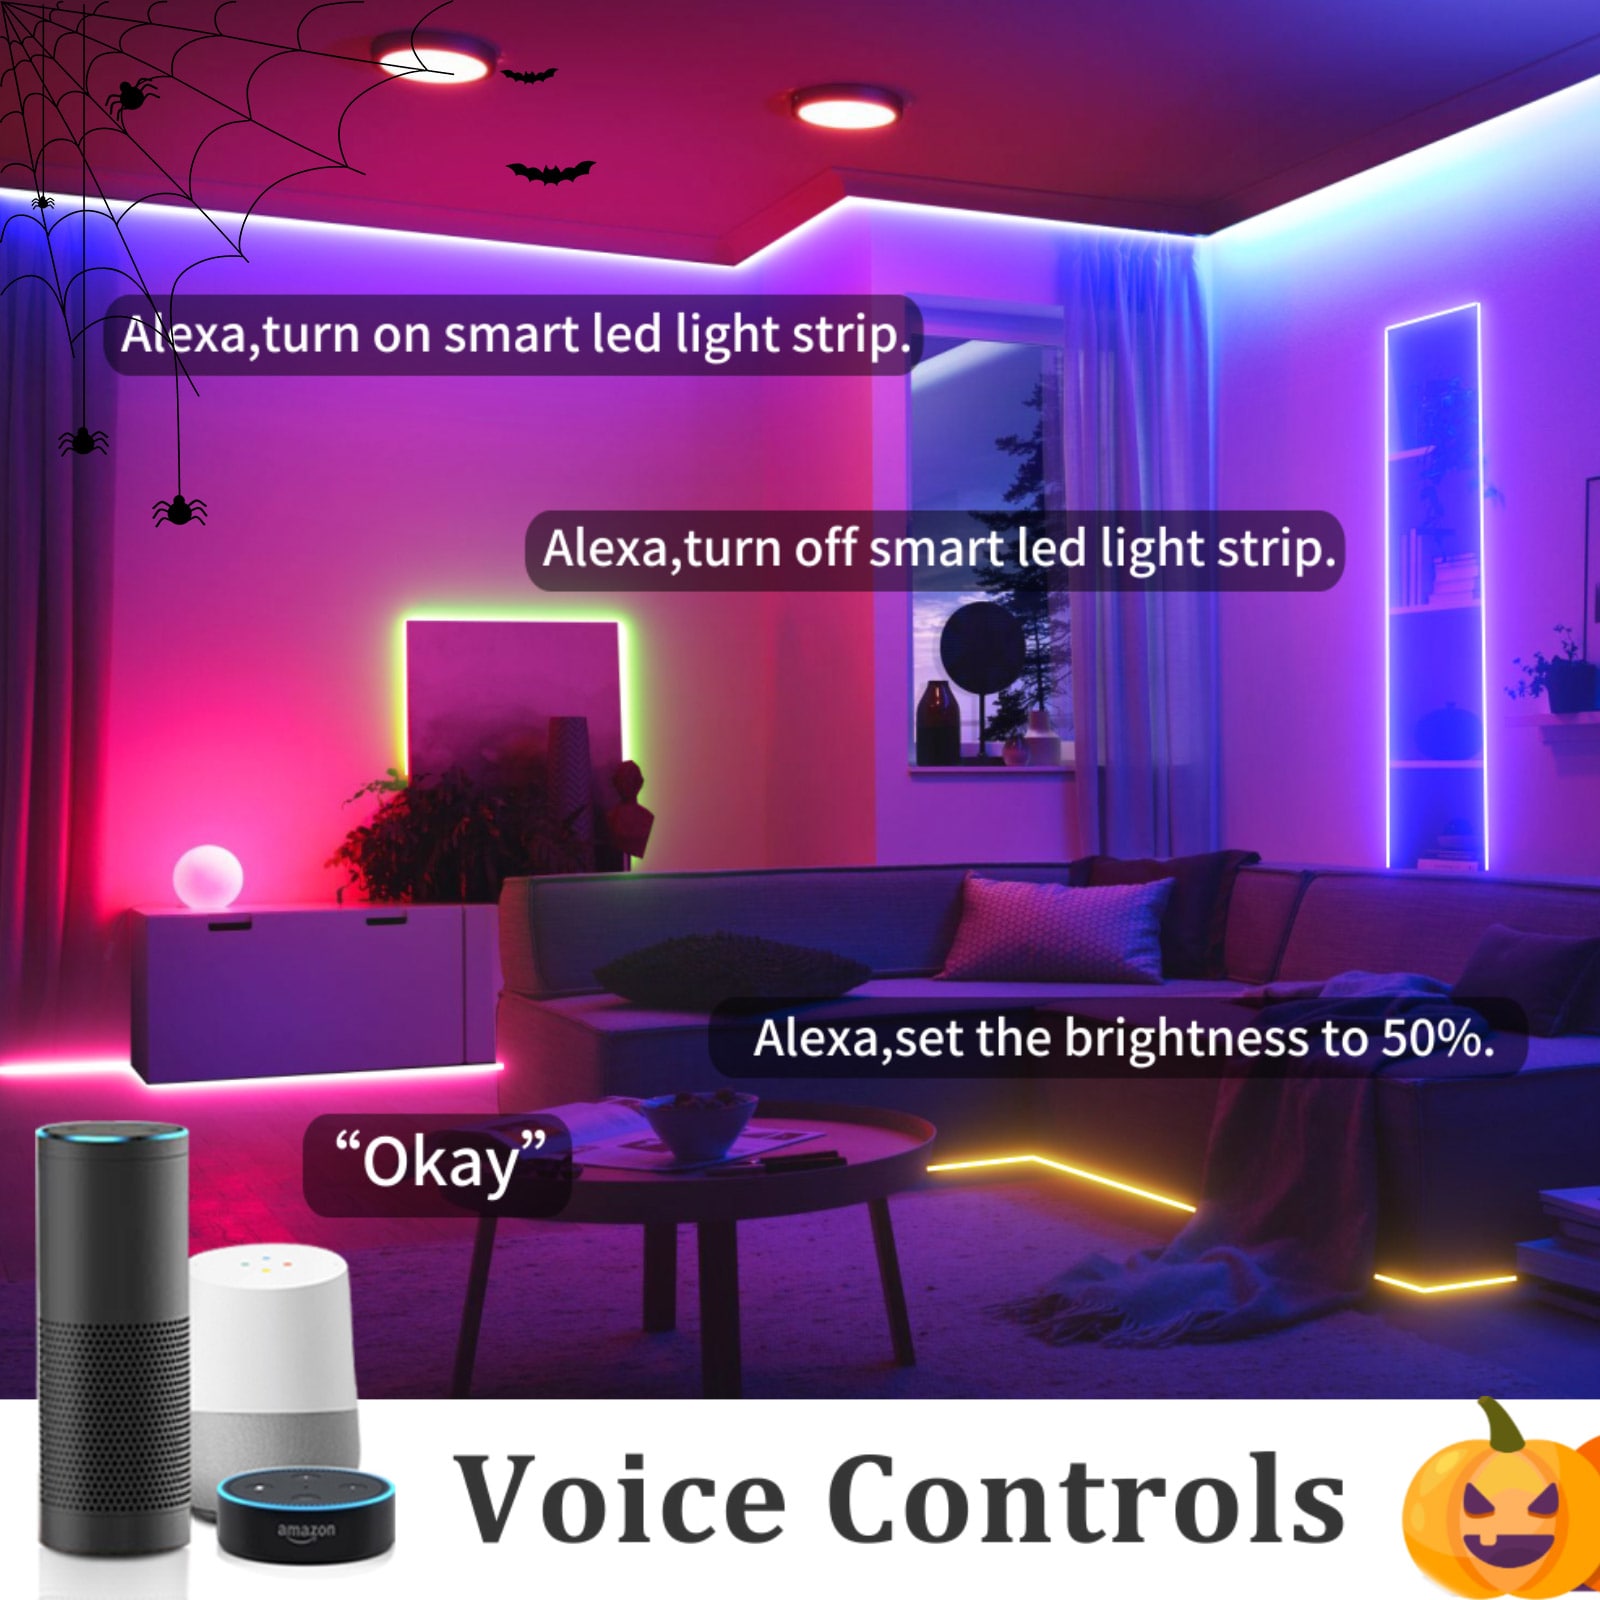 Avatar Controls 90-Light Color Changing LED Strip Light